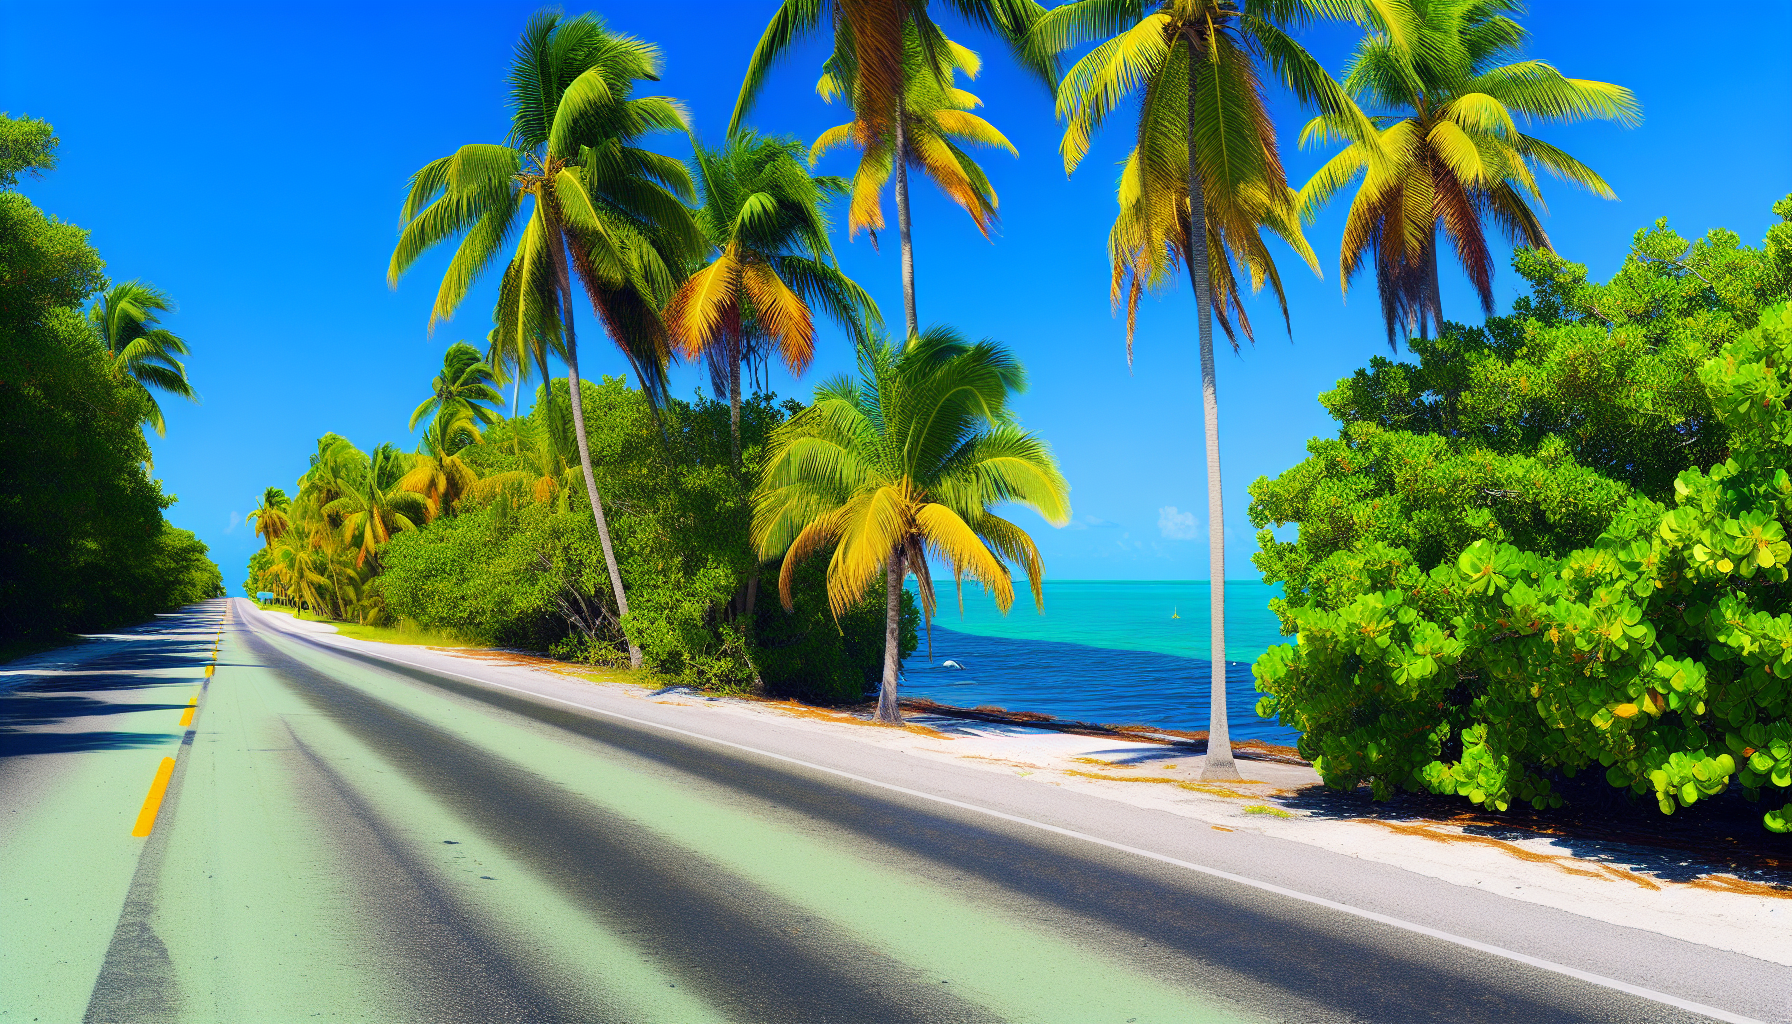 Tropical vibes on the Florida Keys Overseas Highway